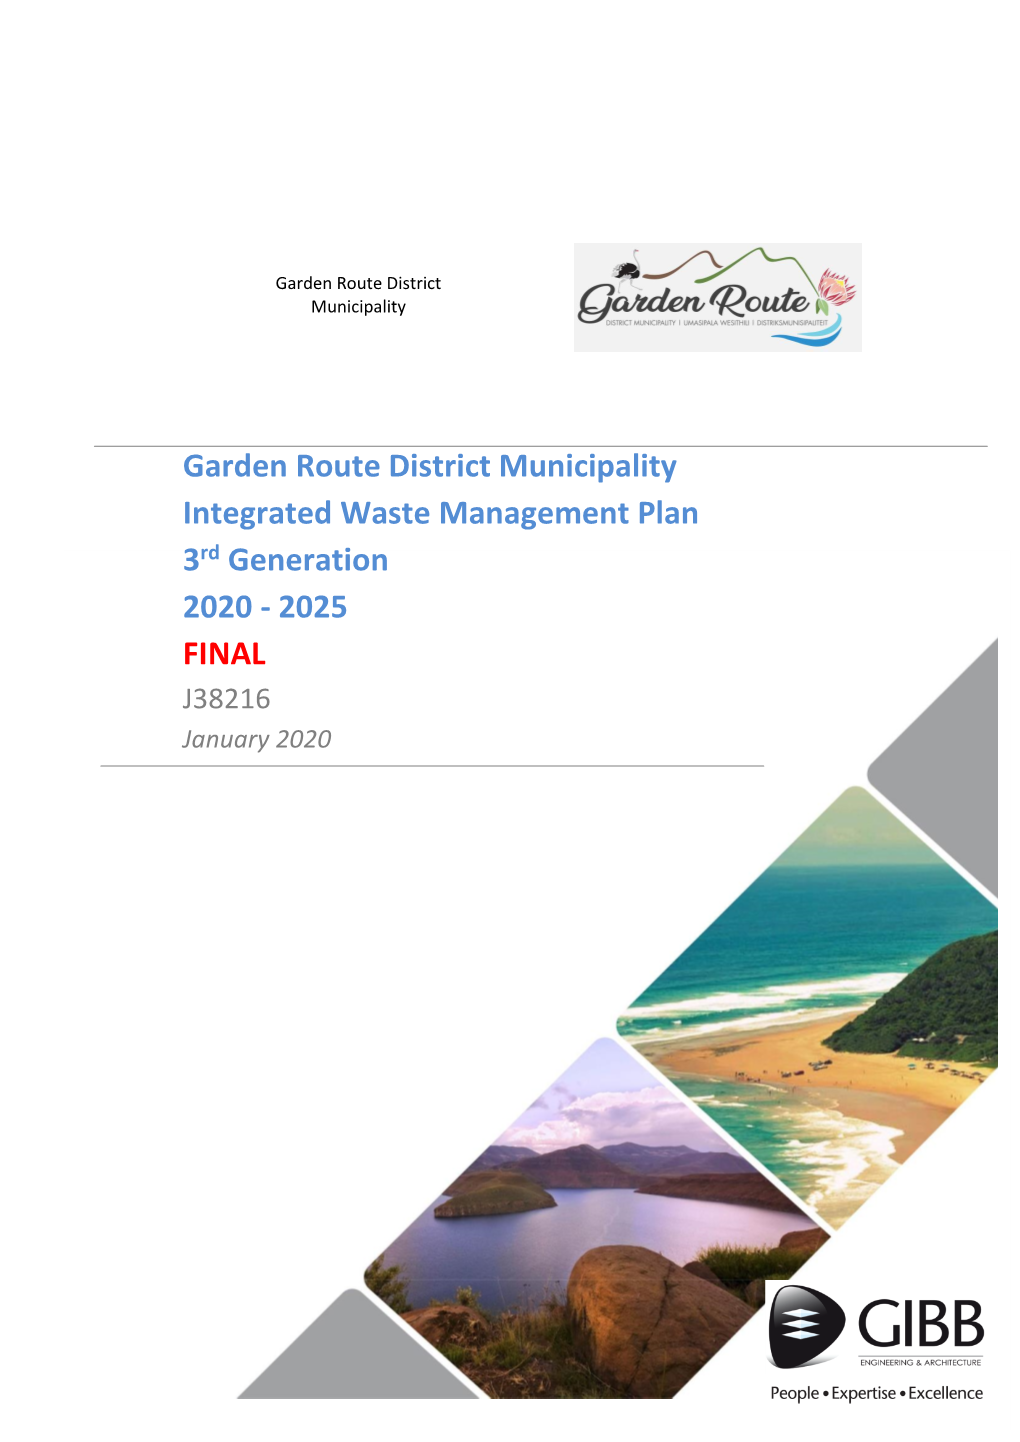 GRDM 3Rd Generation Integrated Waste Management Plan 2020-2025